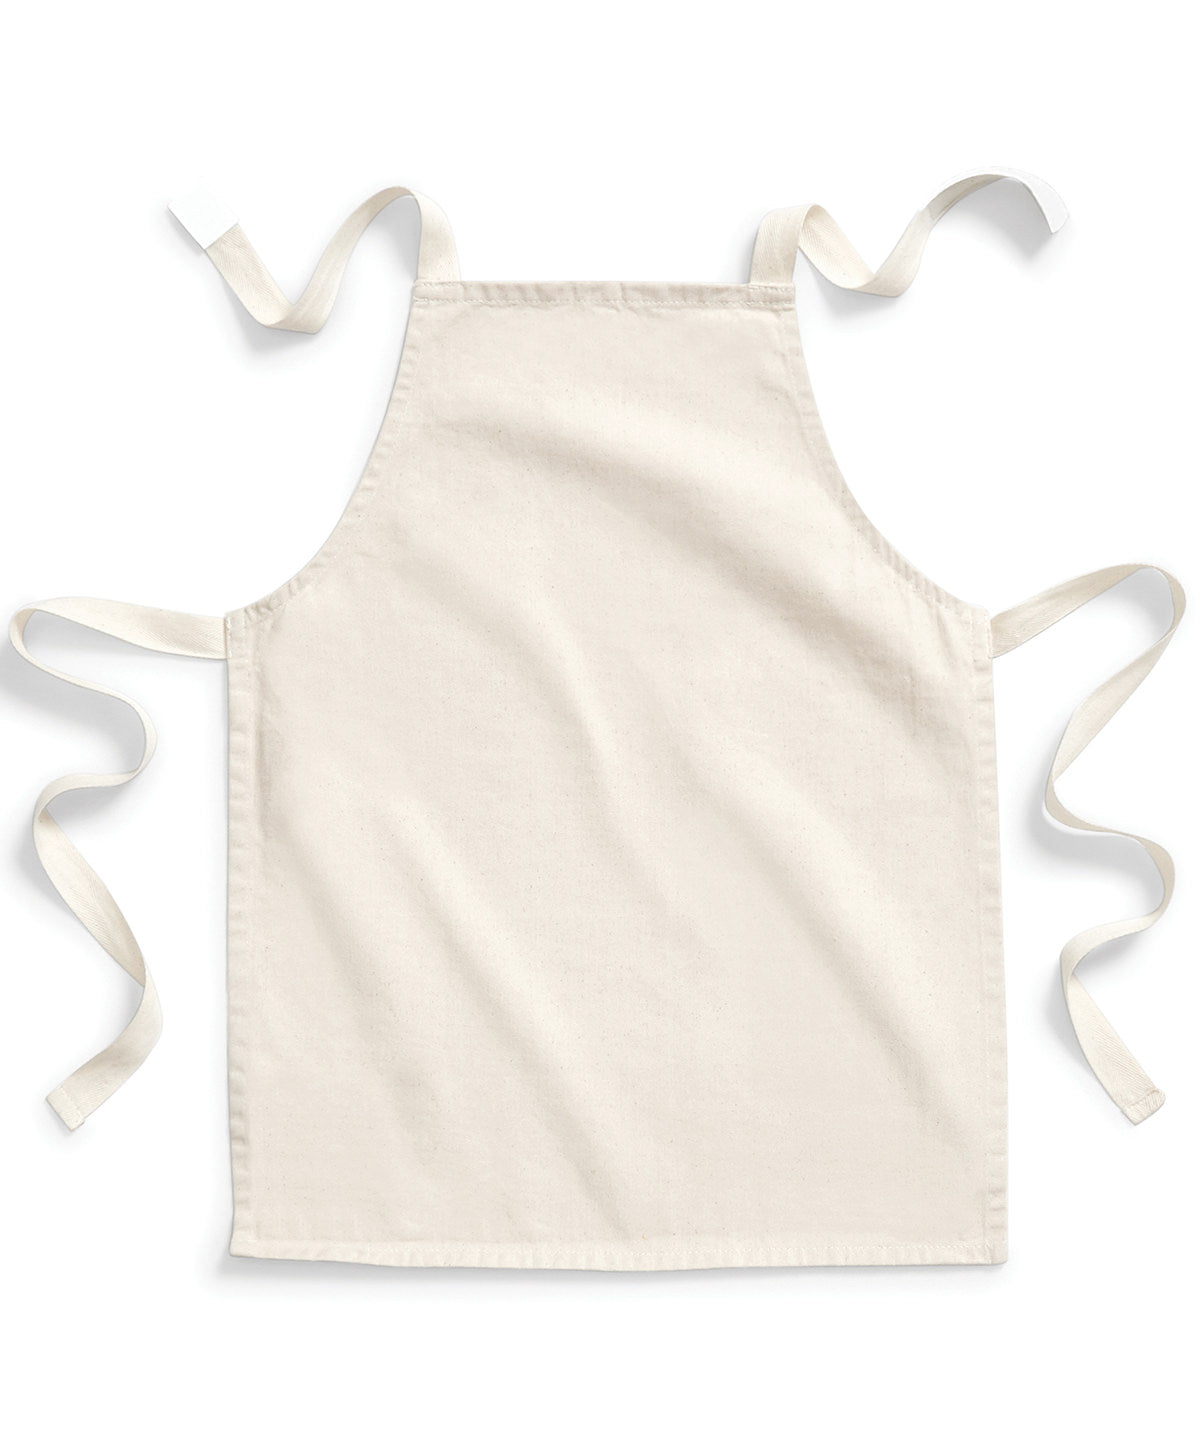 Fairtrade cotton junior craft apron